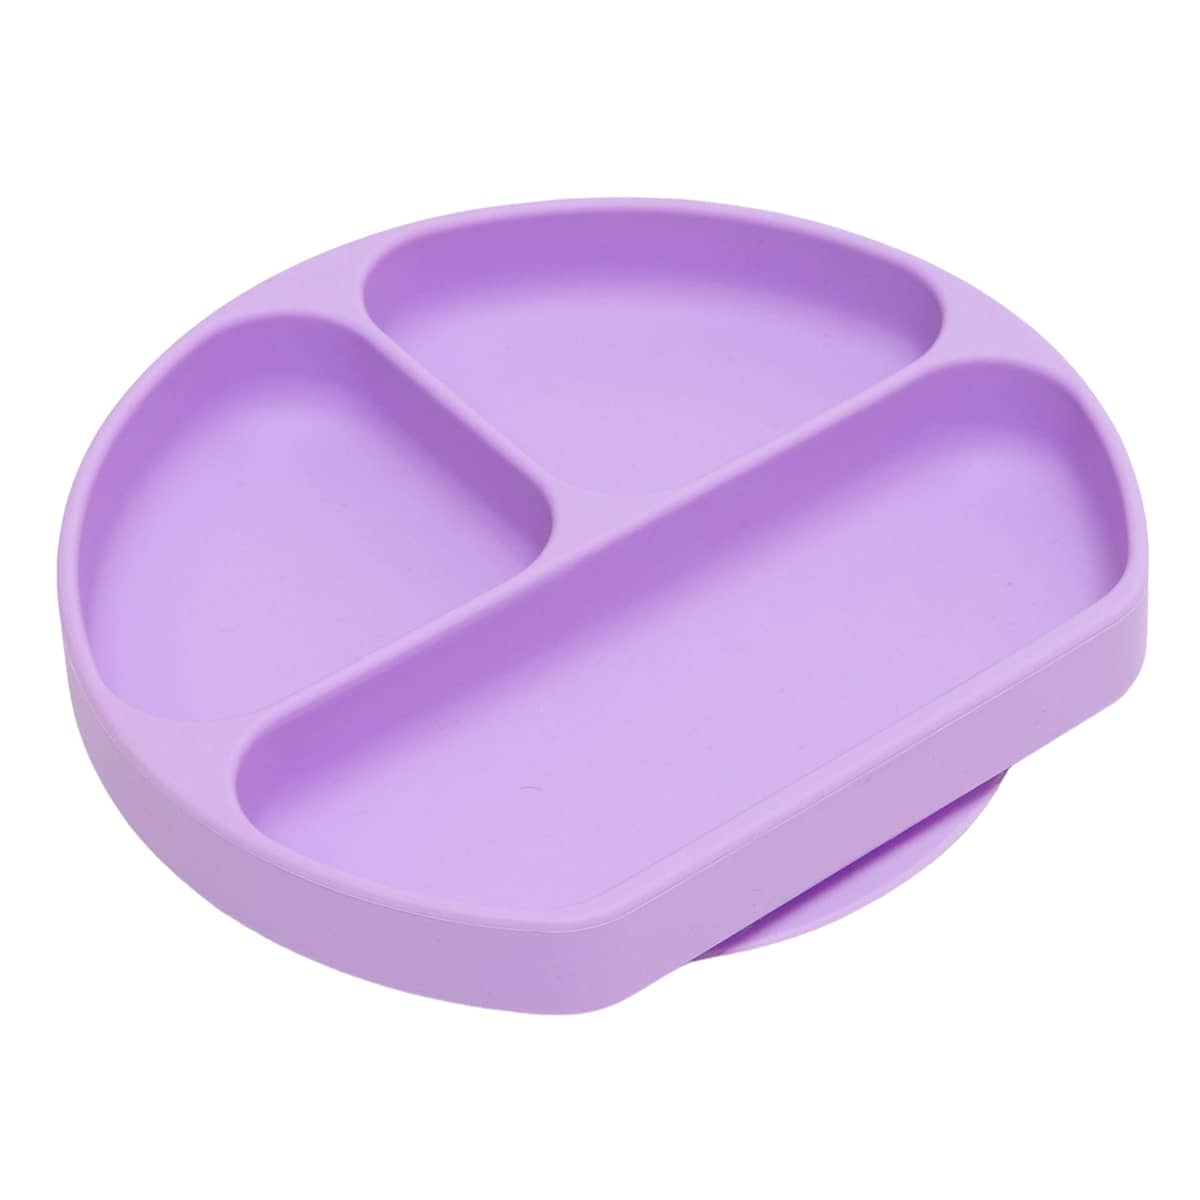 Bumkins Silicone Grip Dish - Lavender